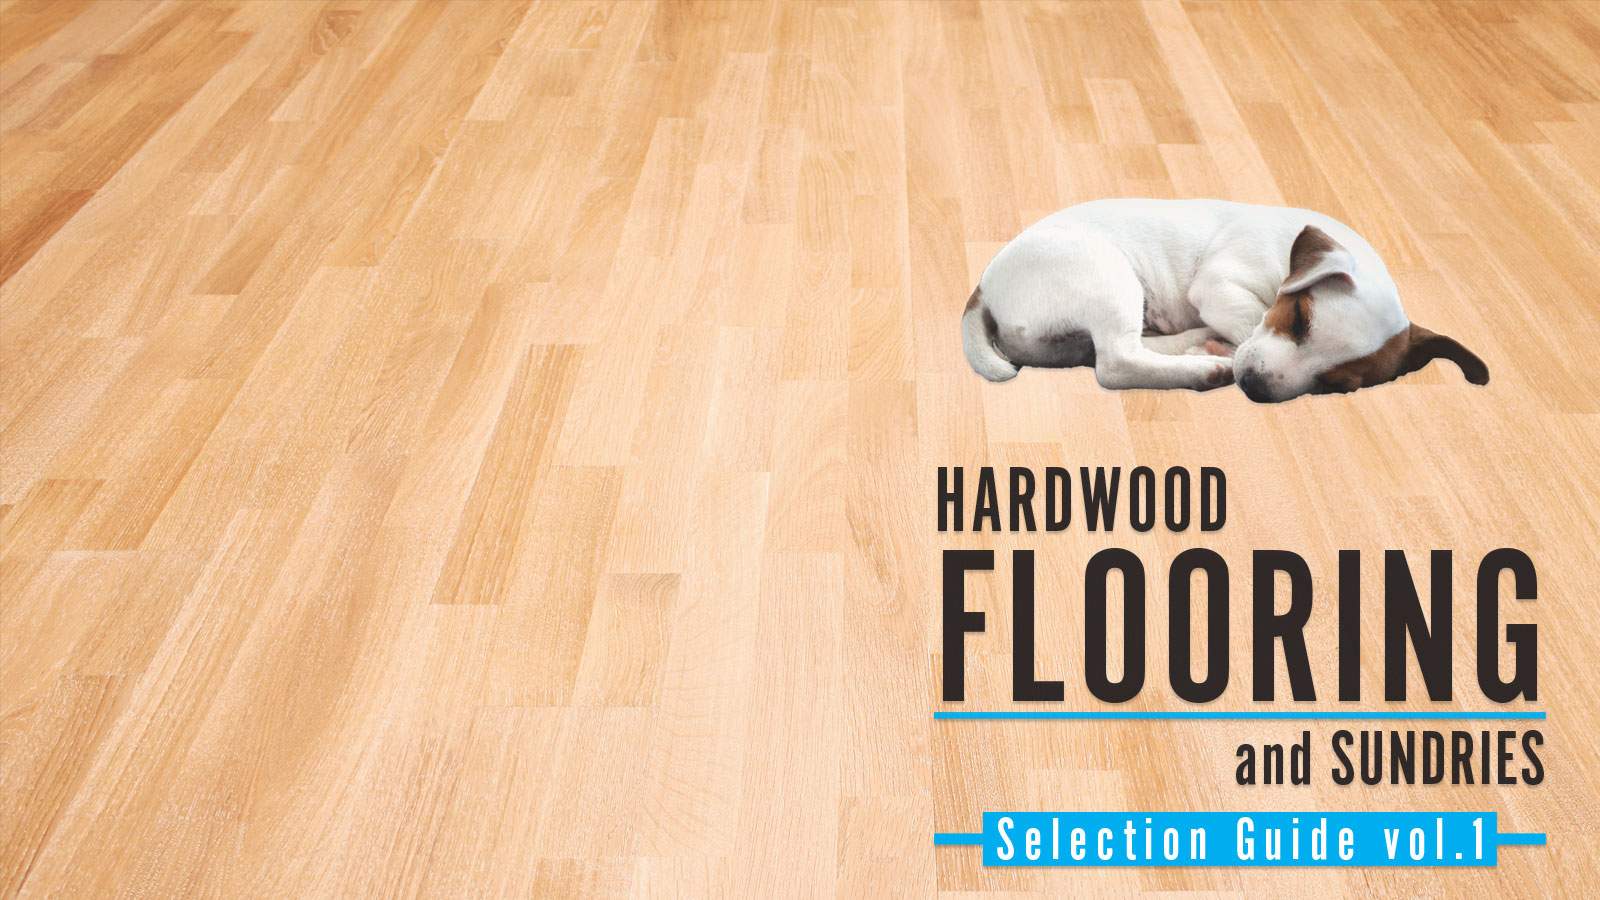 NEW! Hardwood Flooring and Sundries Guide